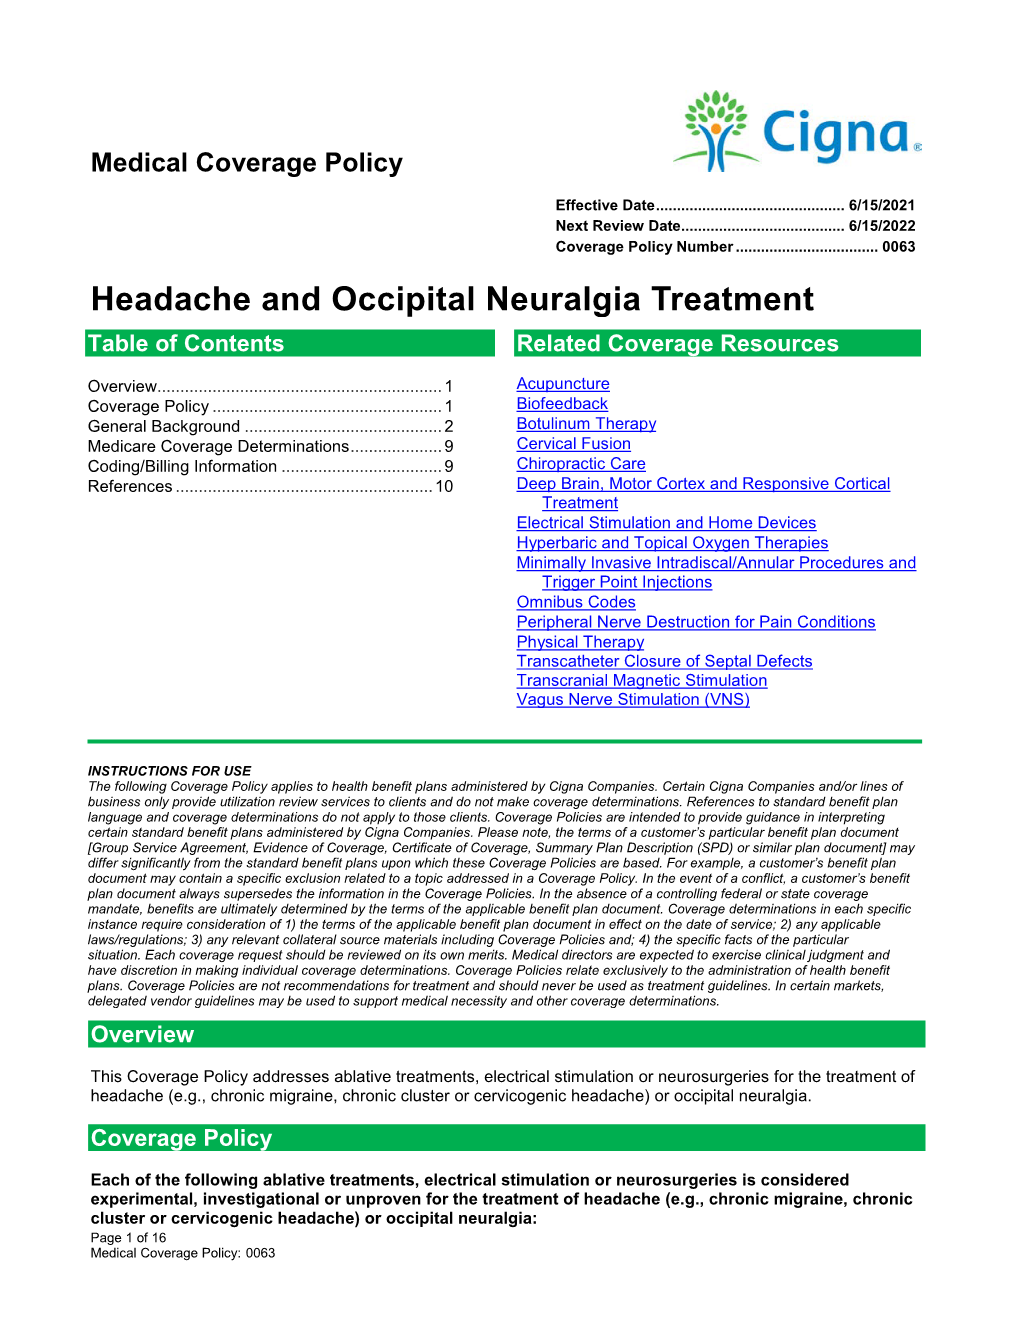 Headache and Occipital Neuralgia Treatment (0063)